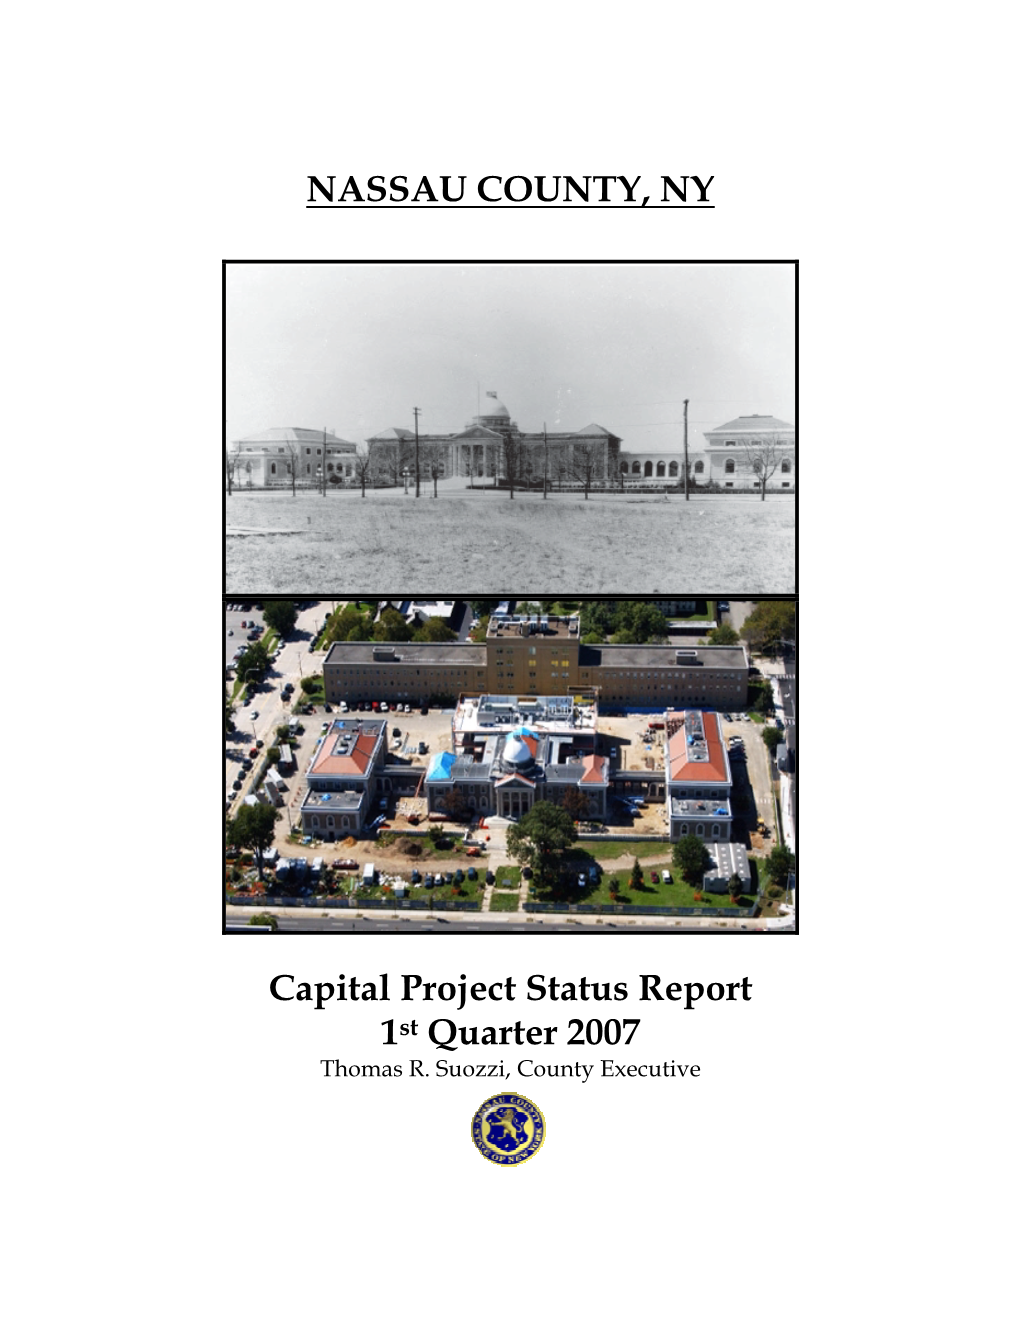 NASSAU COUNTY, NY Capital Project Status Report 1St Quarter